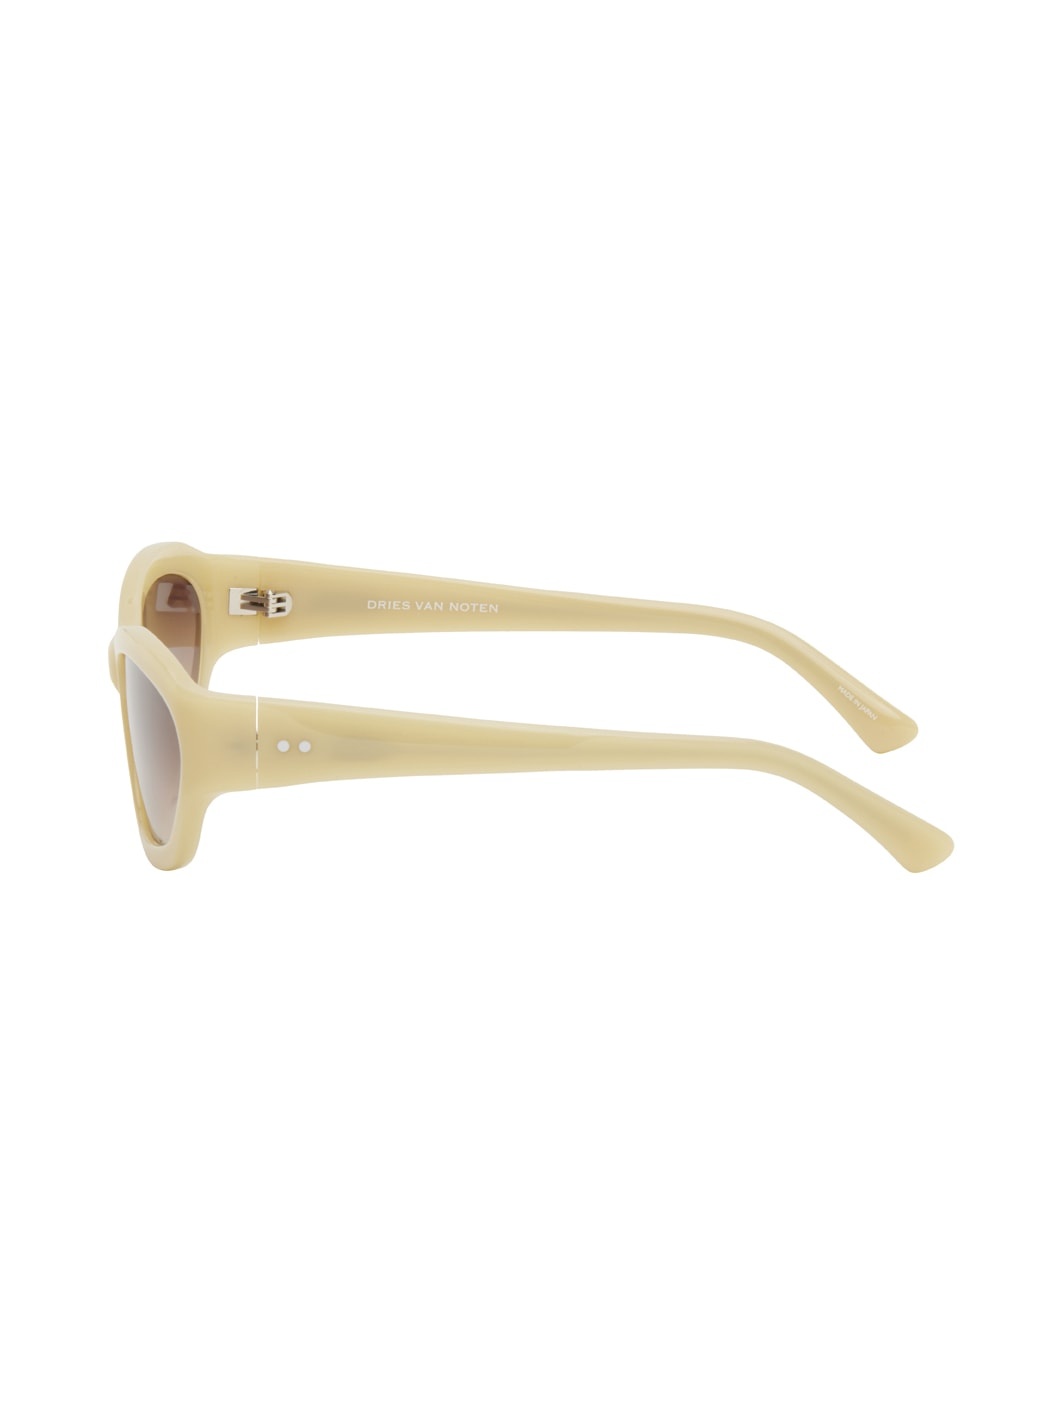 Beige Linda Farrow Edition Goggle Sunglasses - 3